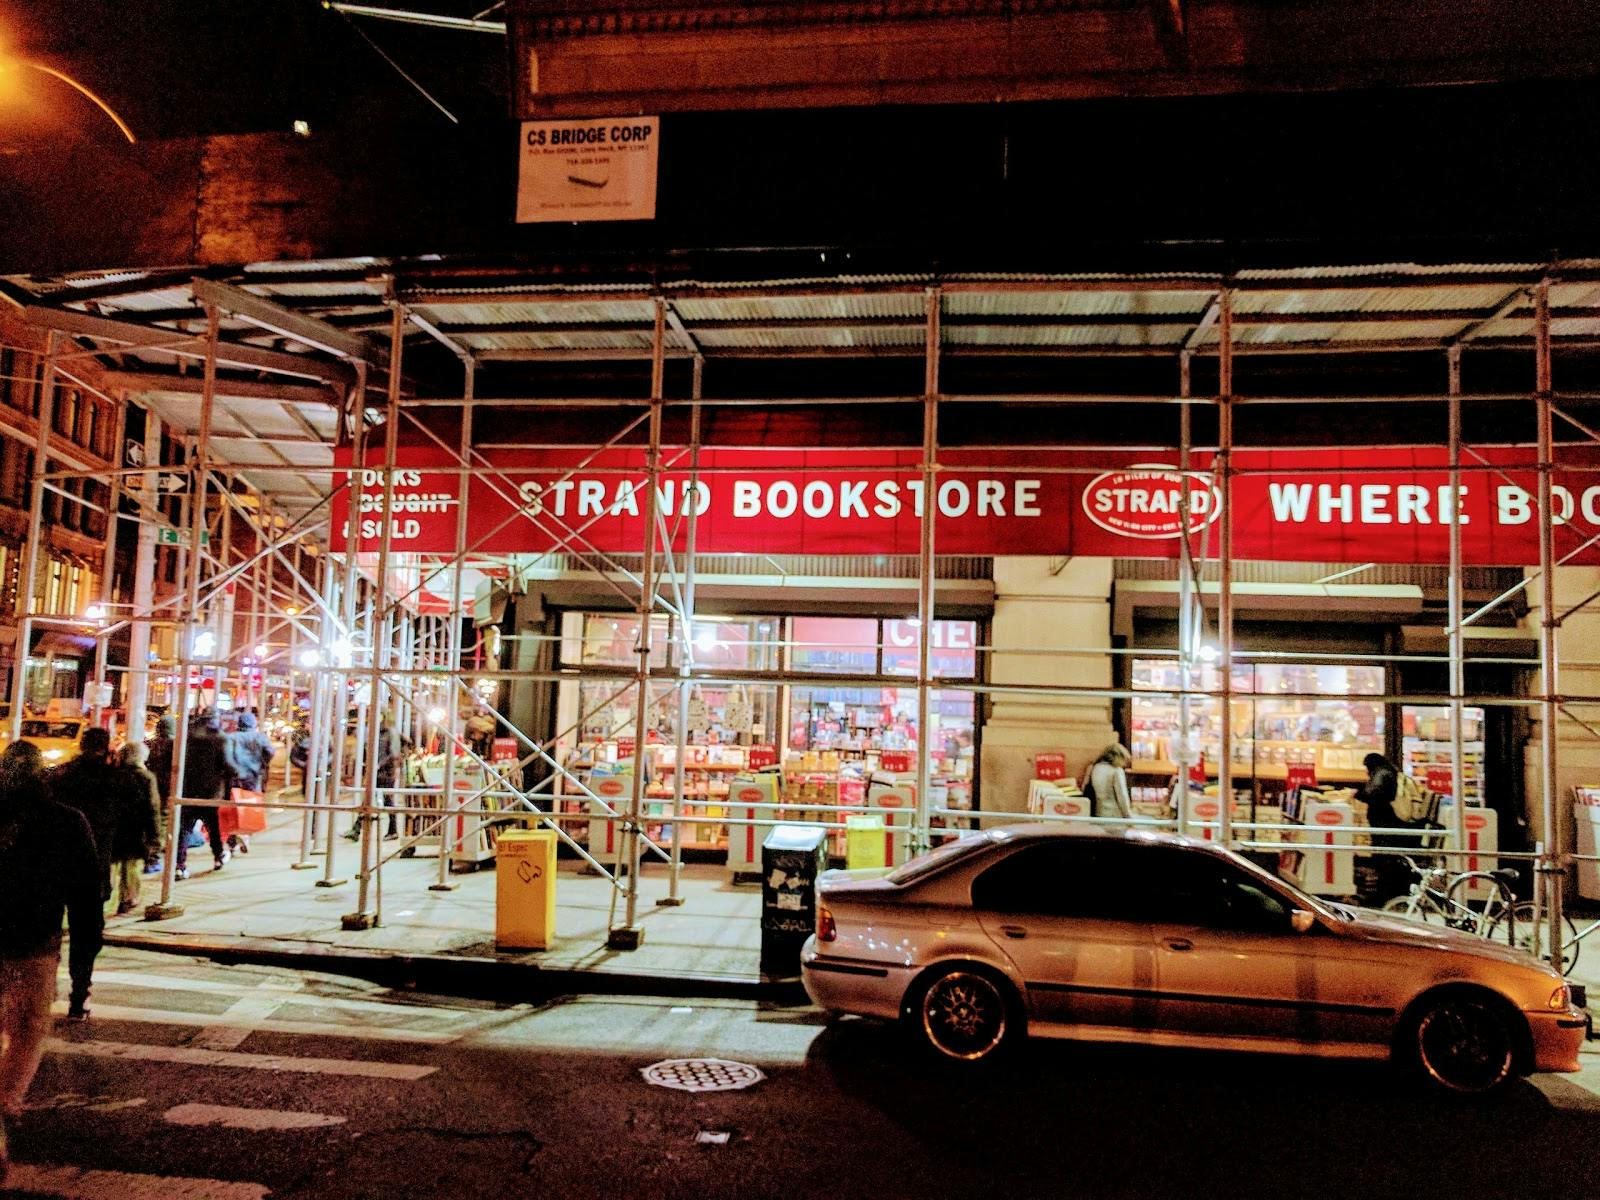 Image - Strand Book Store